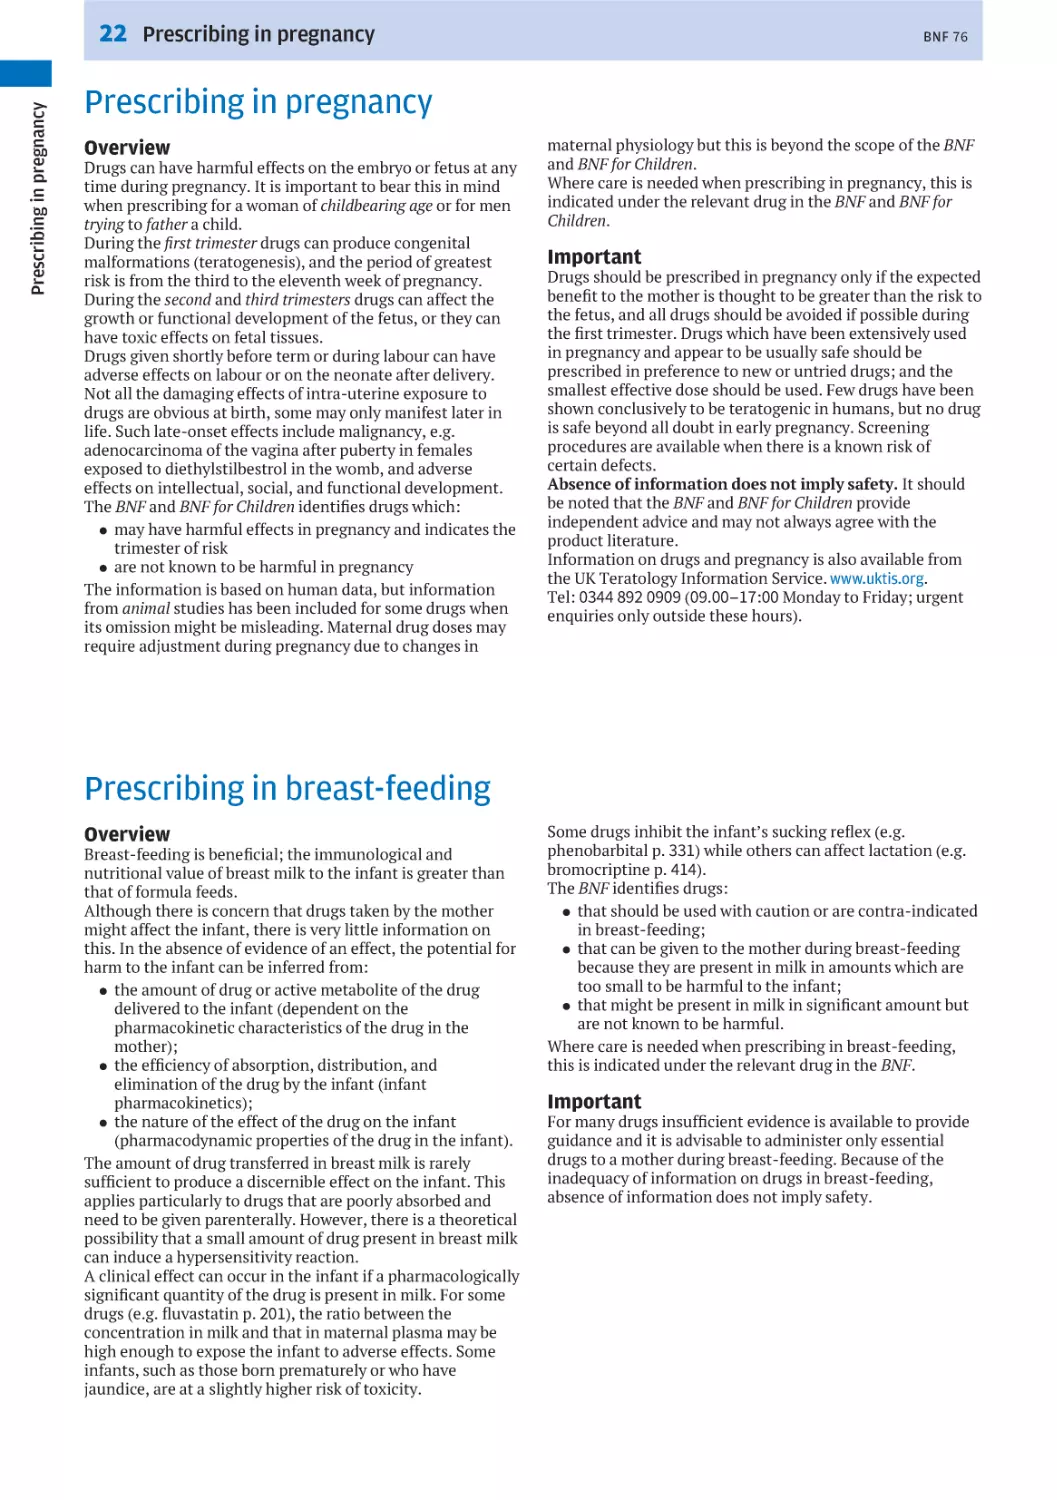 Prescribing in pregnancy
Prescribing in breast-feeding